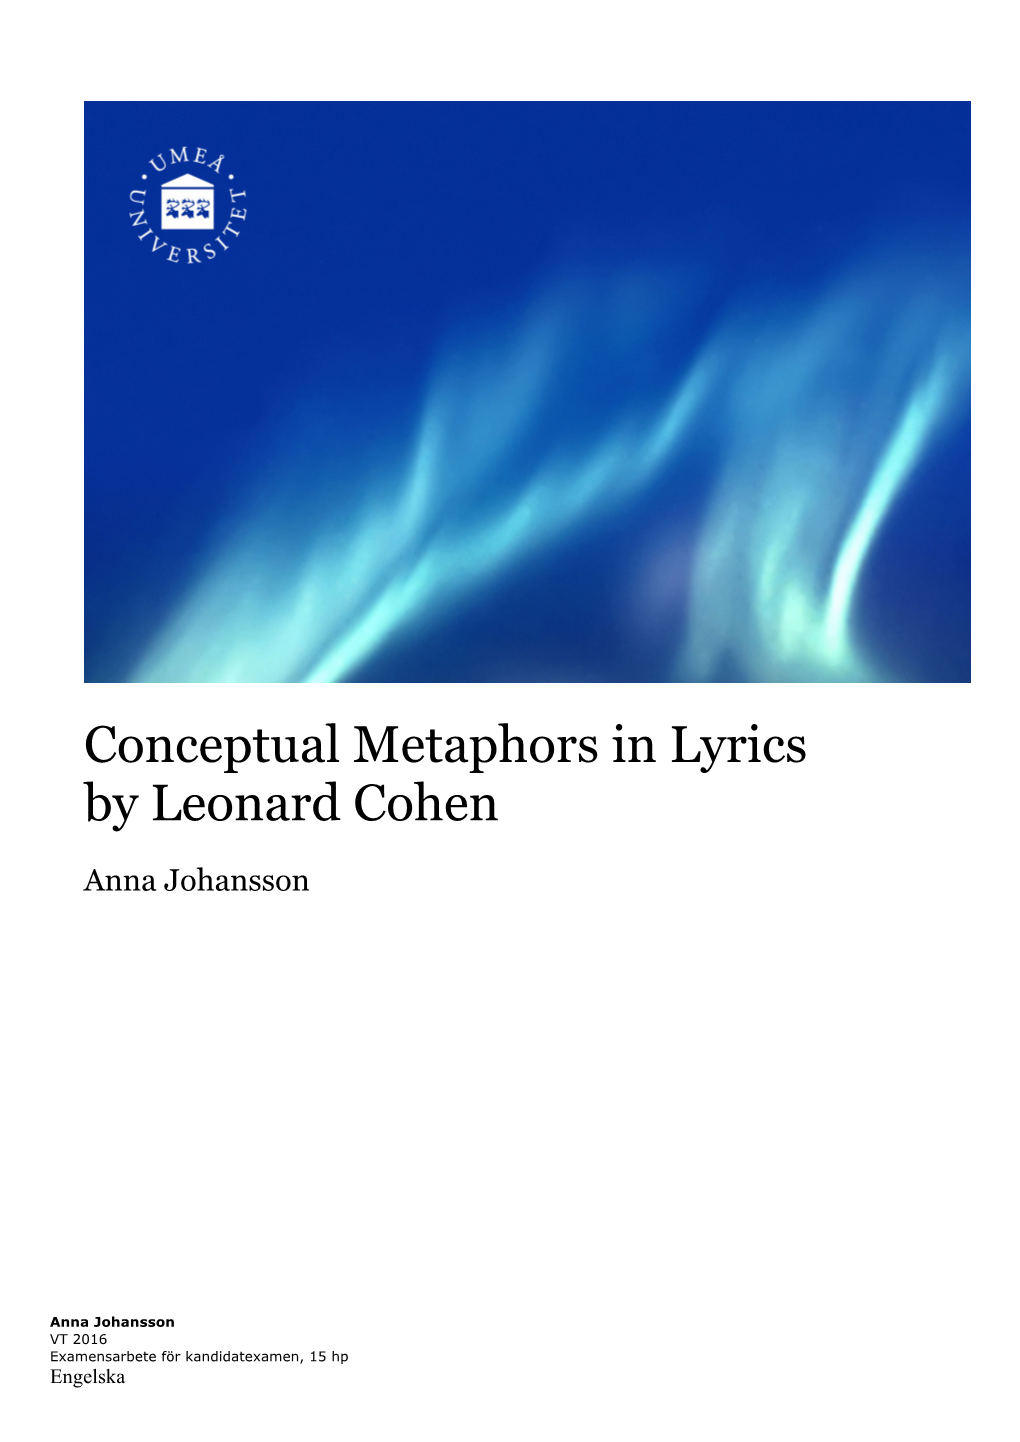 Conceptual Metaphors in Lyrics by Leonard Cohen